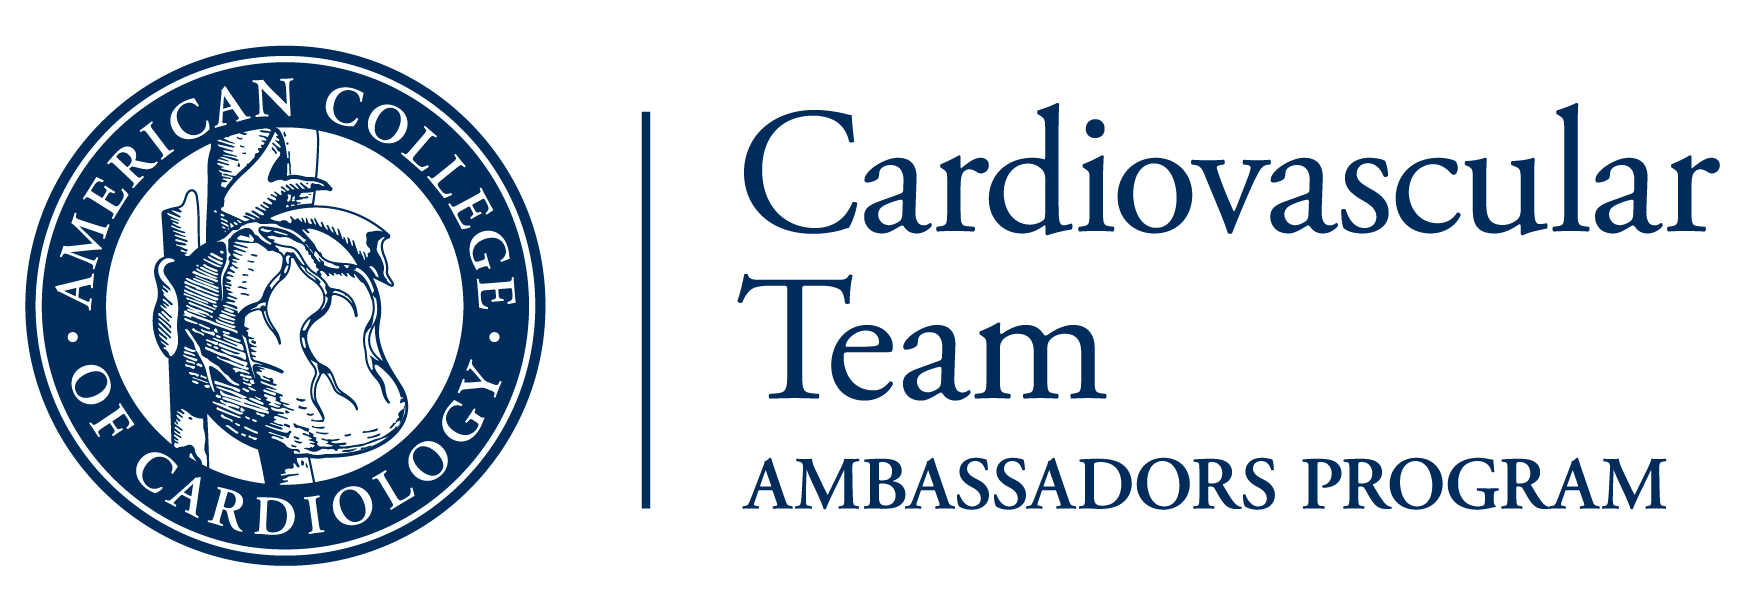 CV Team Ambassadors Program